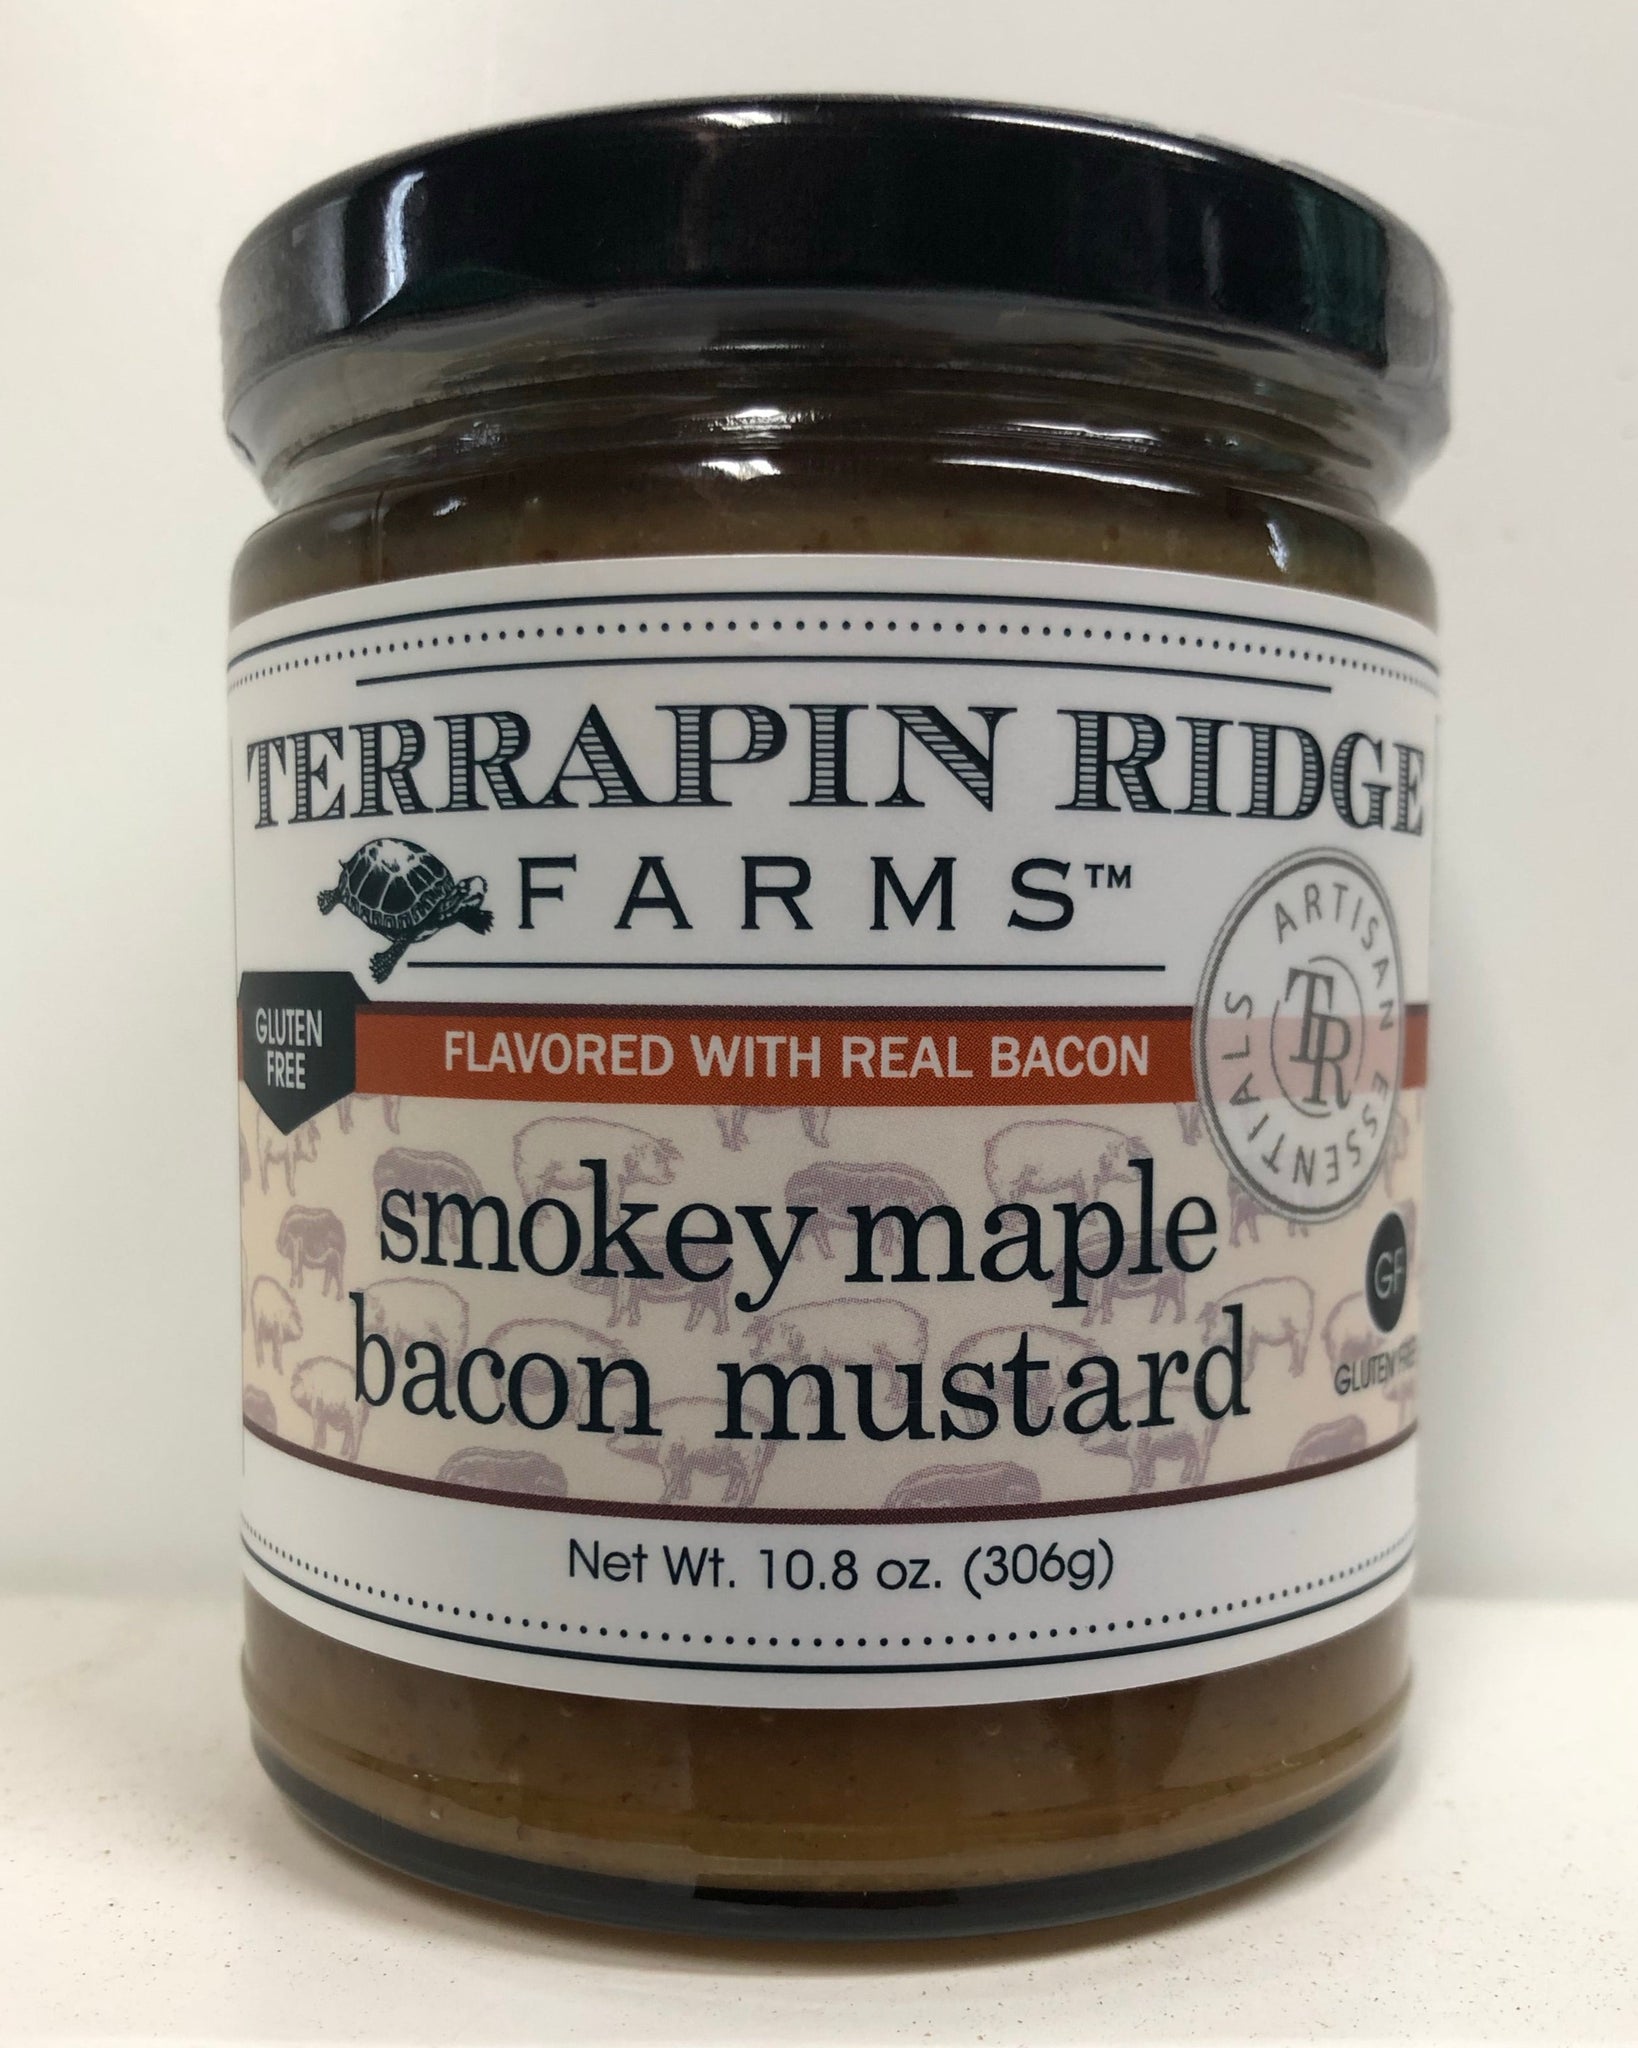 Smoky Maple Bacon Mustard from Terrapin Ridge Farms